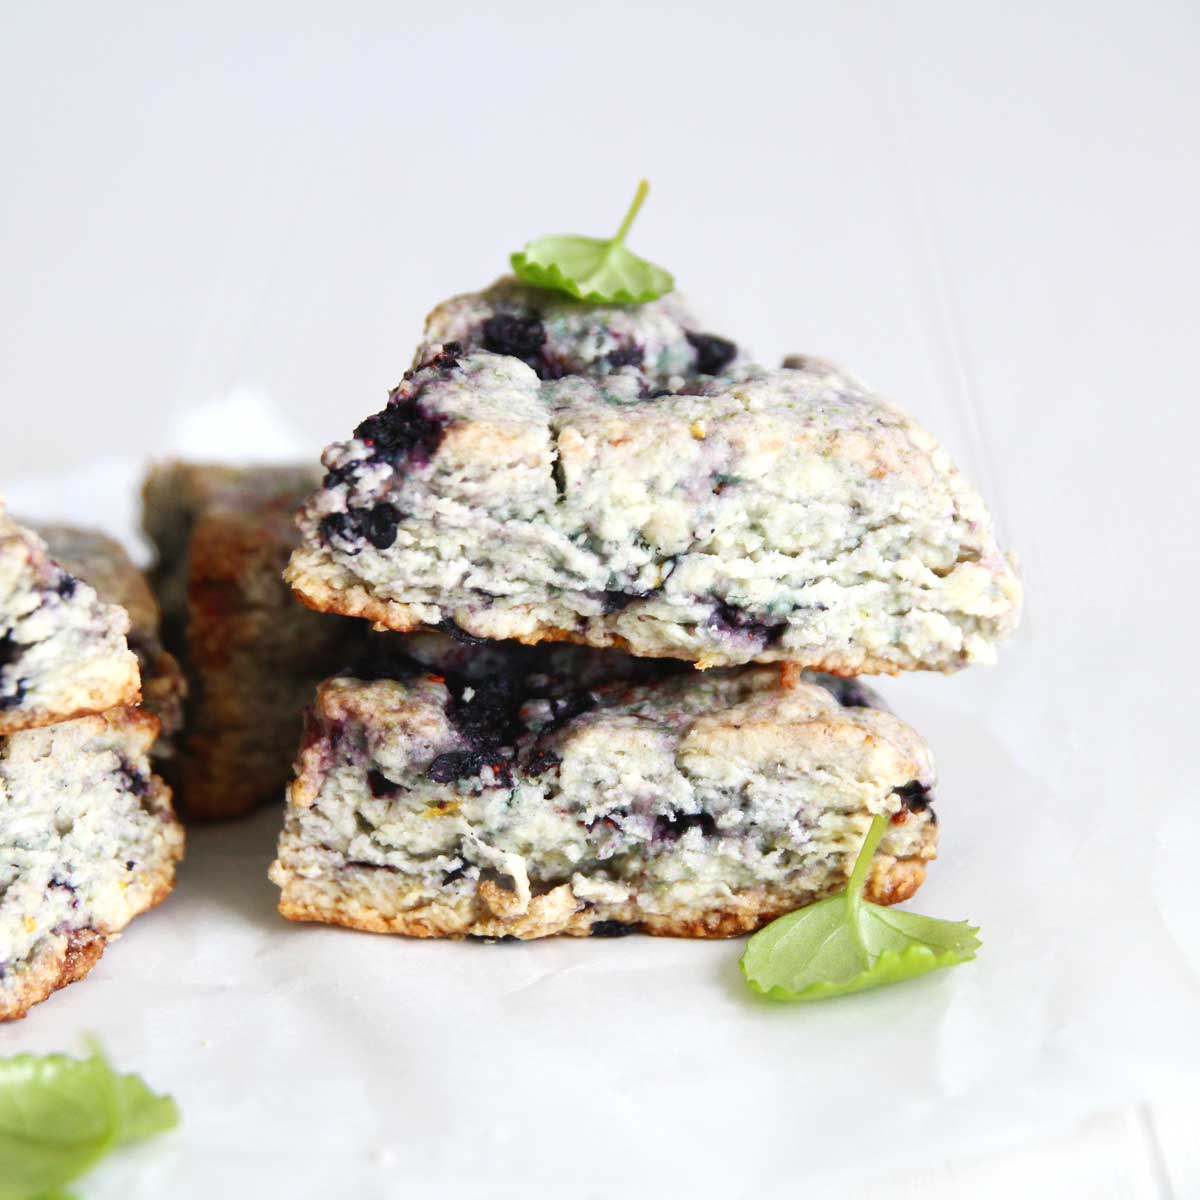 Bursting with Flavor Vegan Blueberry Scones (No Eggs, No Butter Required!) - Cauliflower Everything Bagel Scones